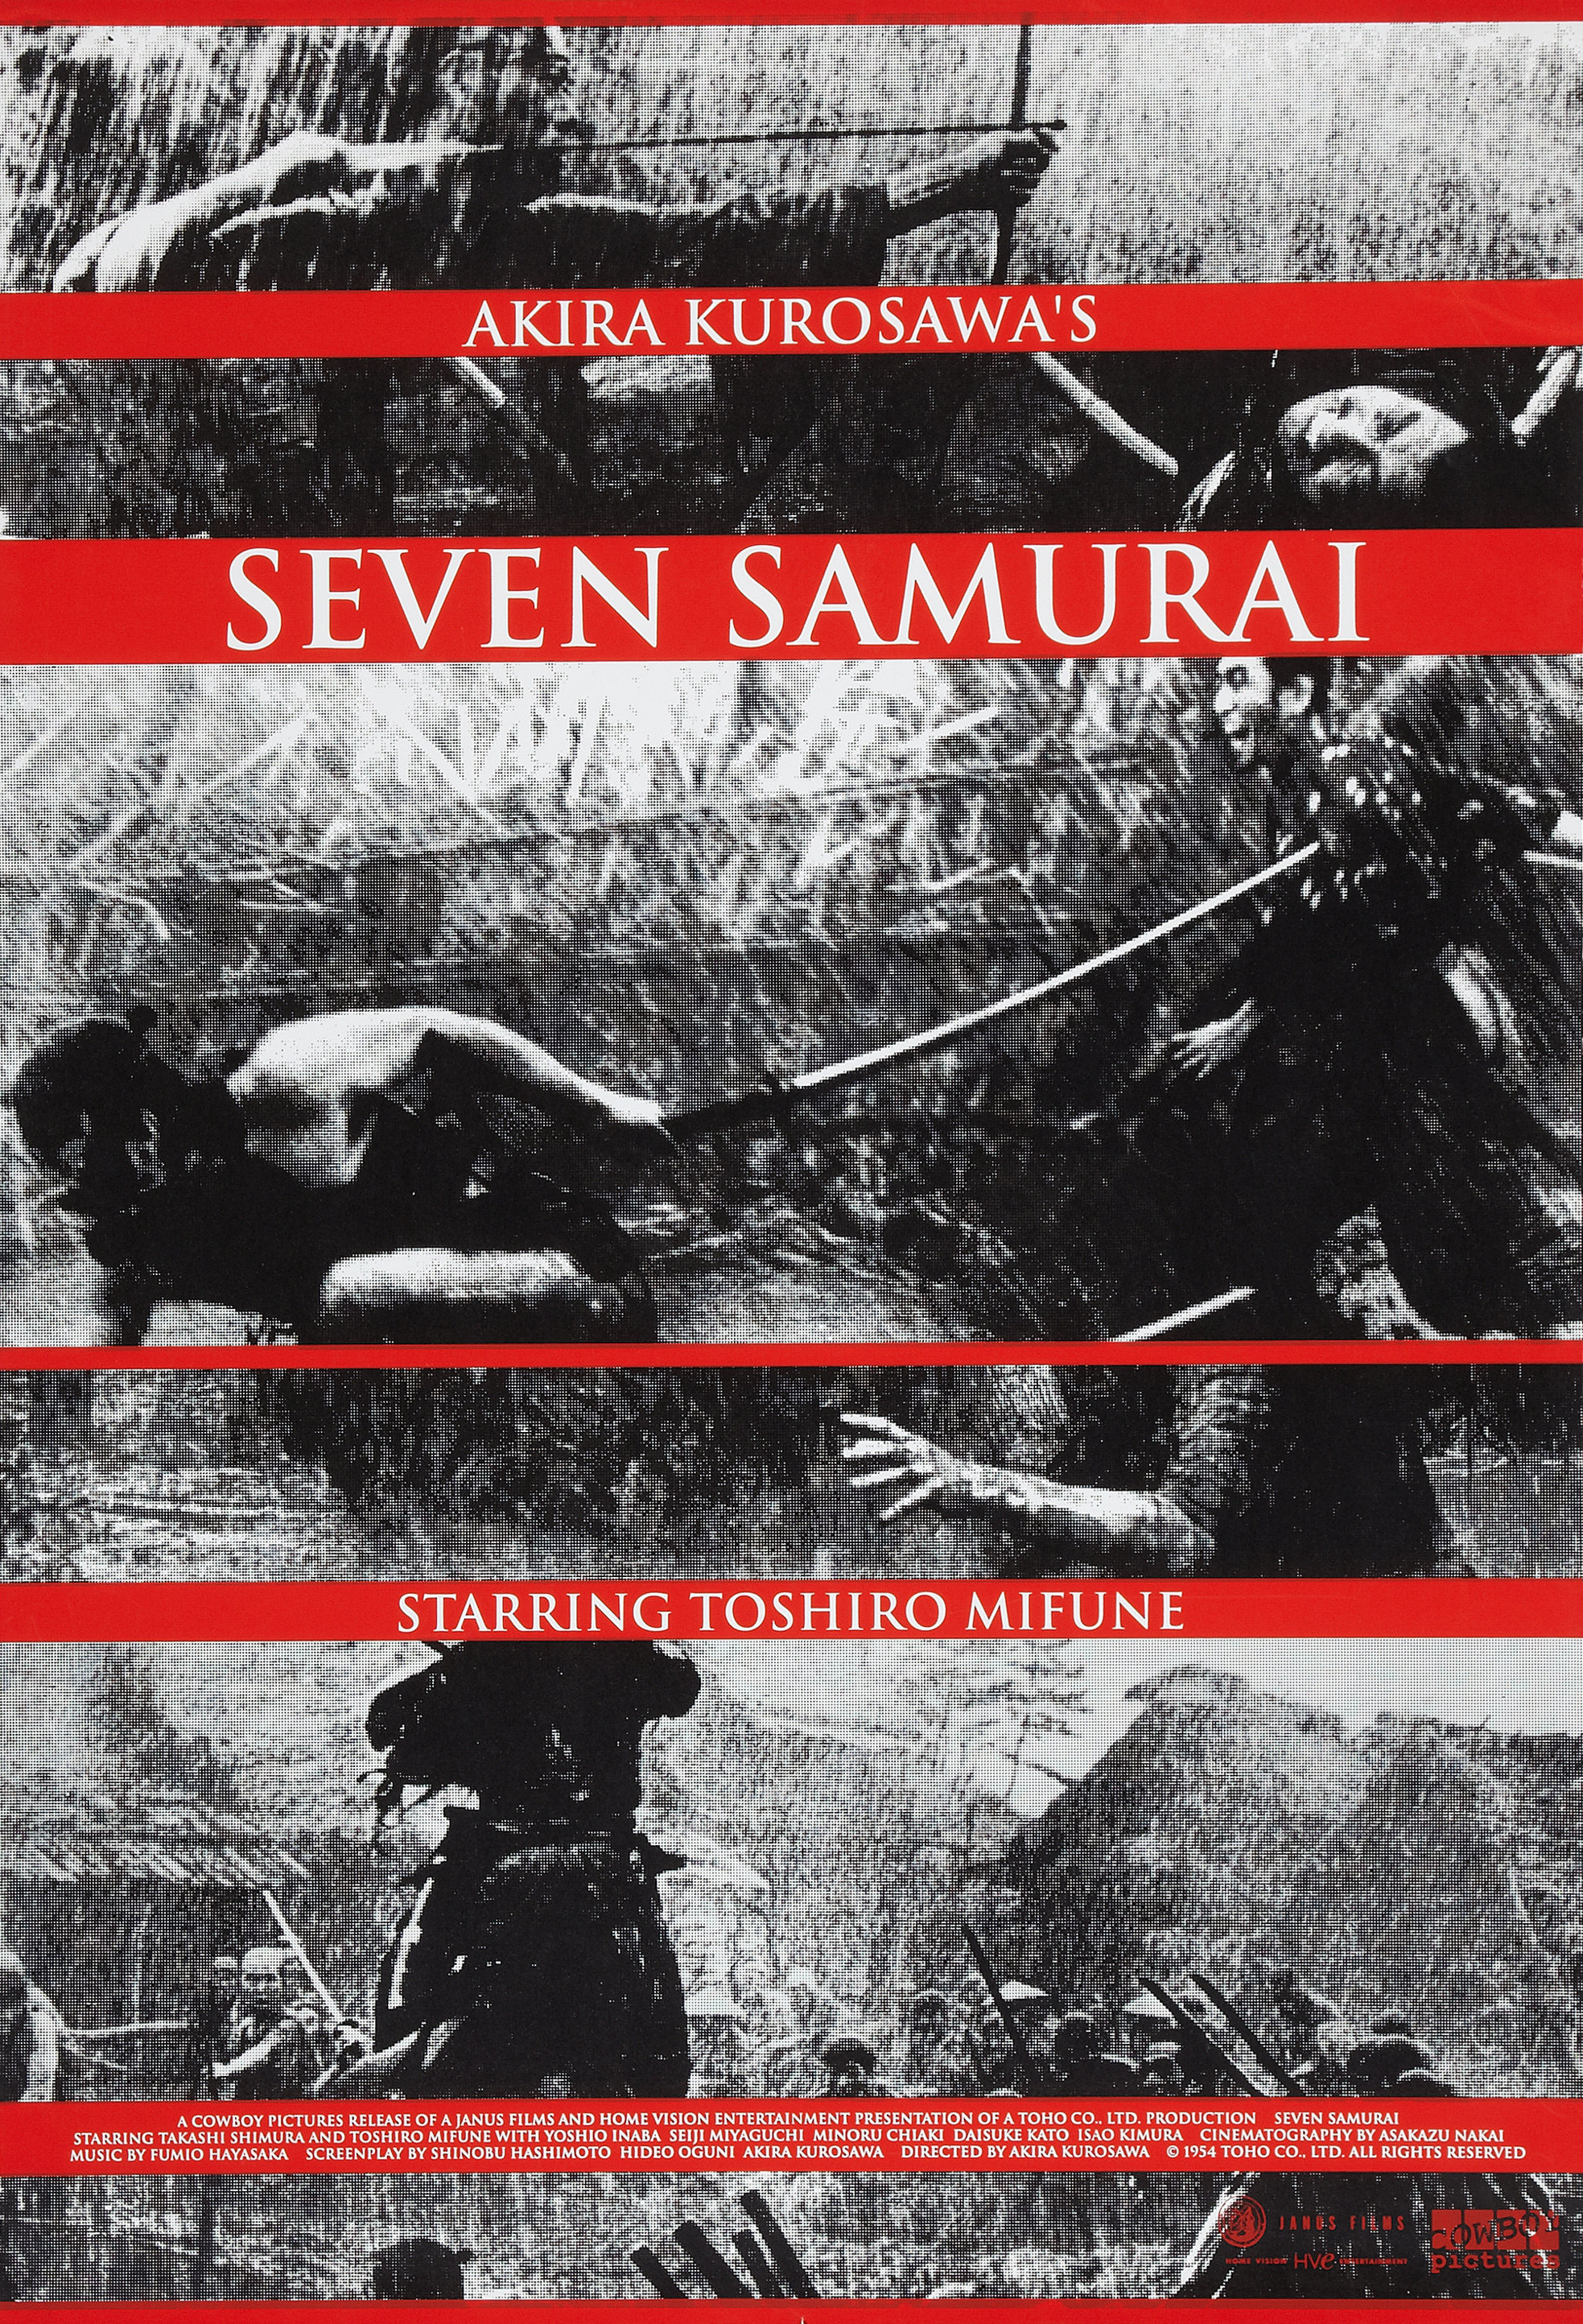 Mega Sized Movie Poster Image for Shichinin no samurai (#2 of 2)